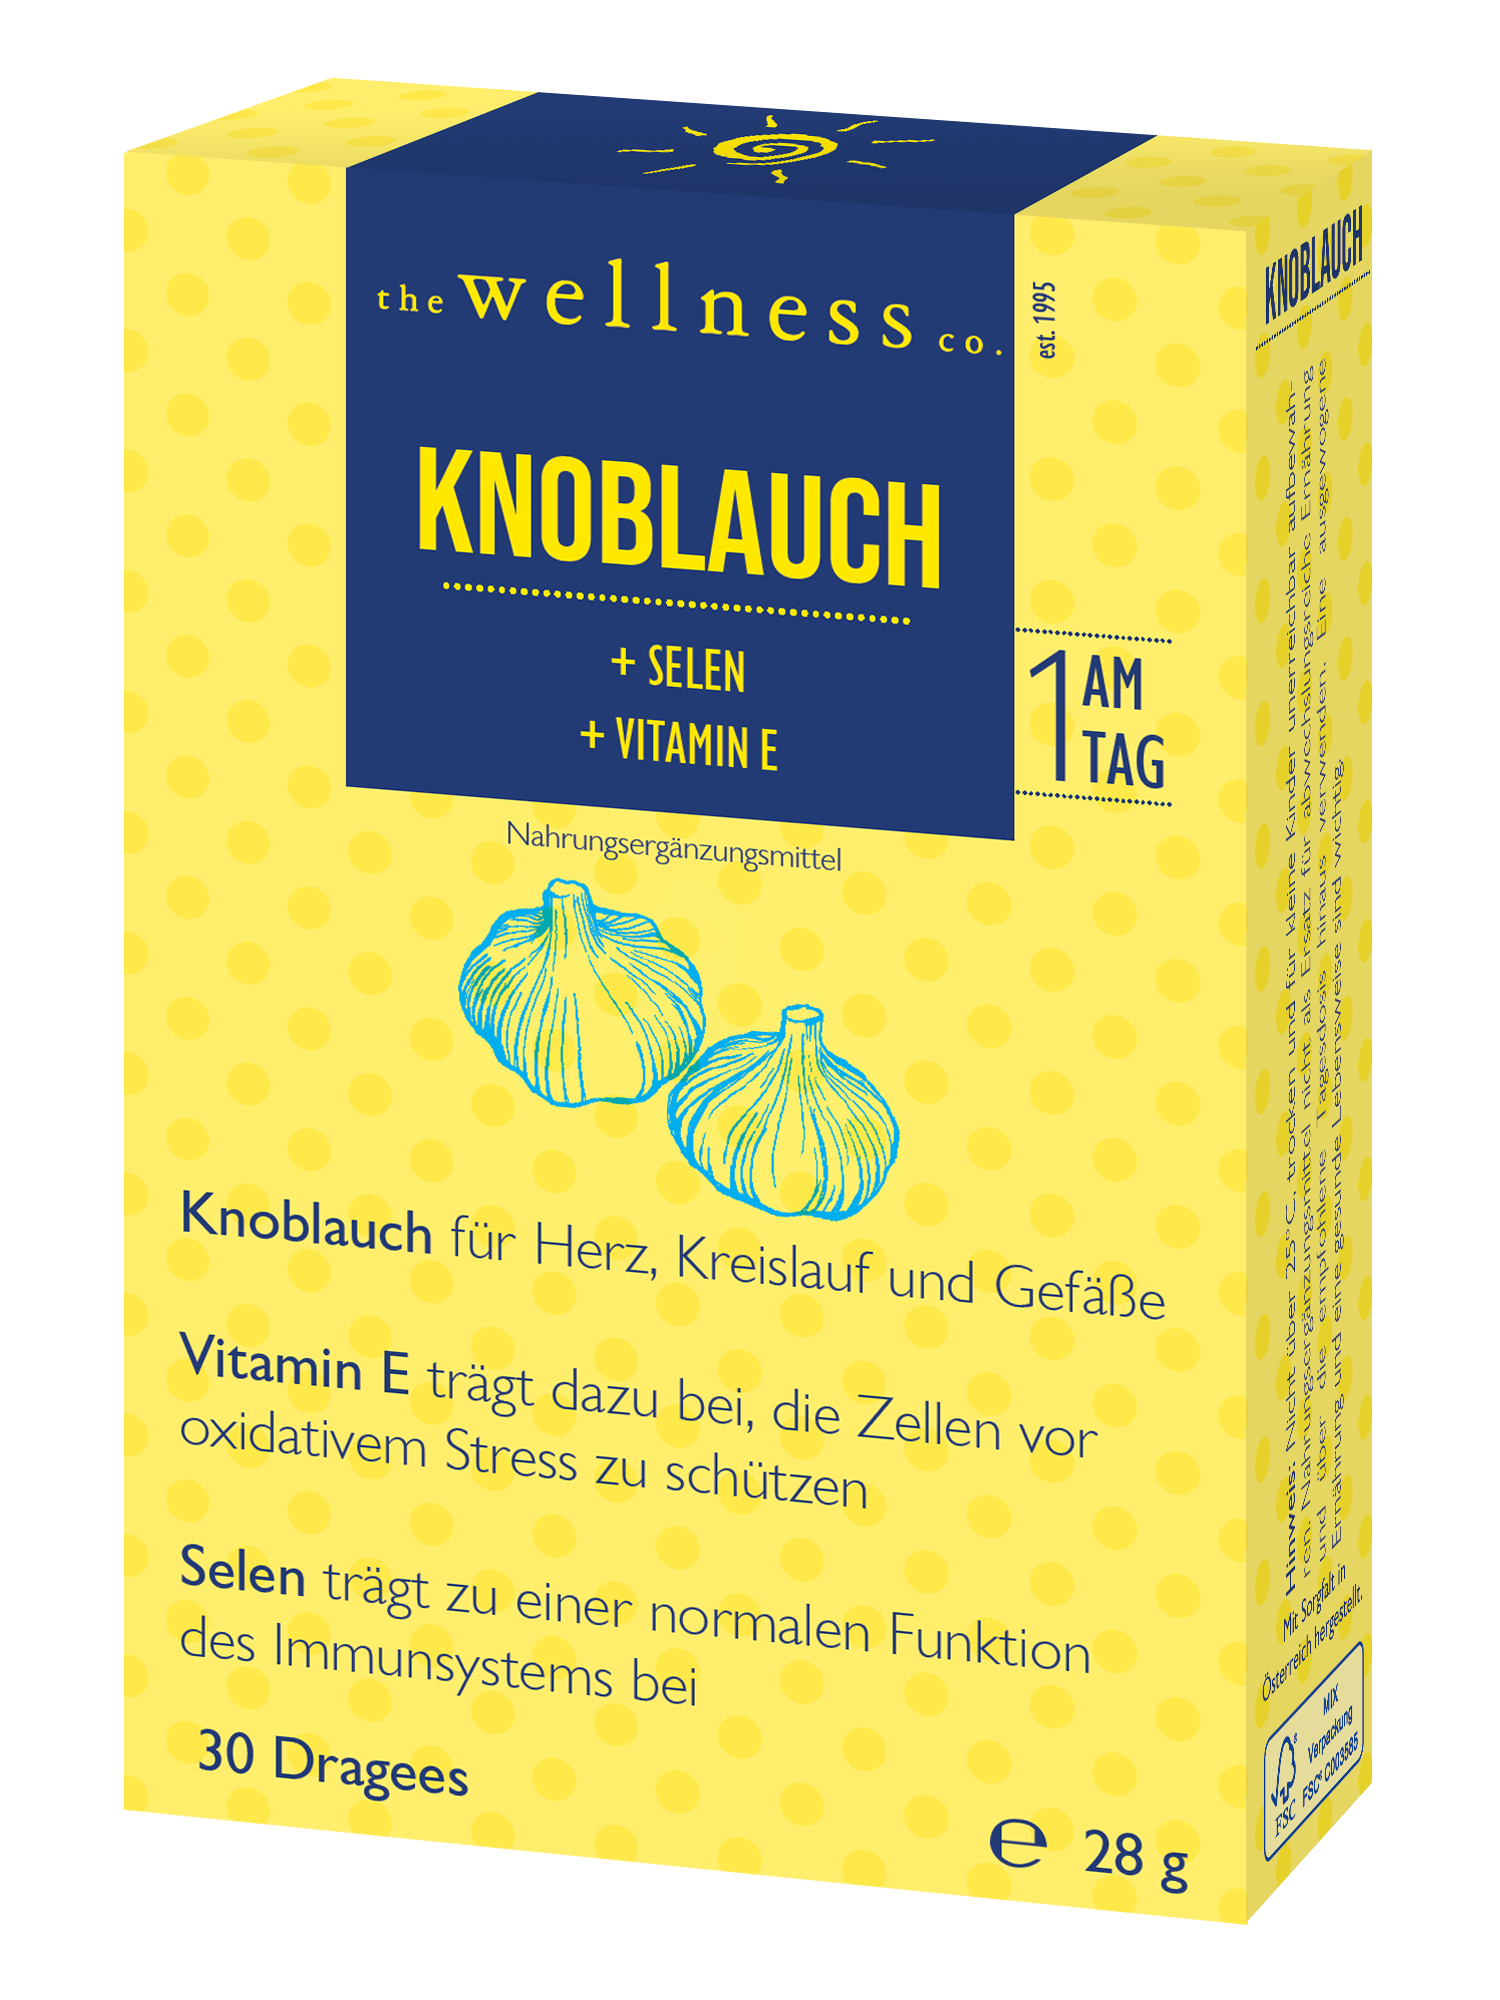 Wellness Knoblauch